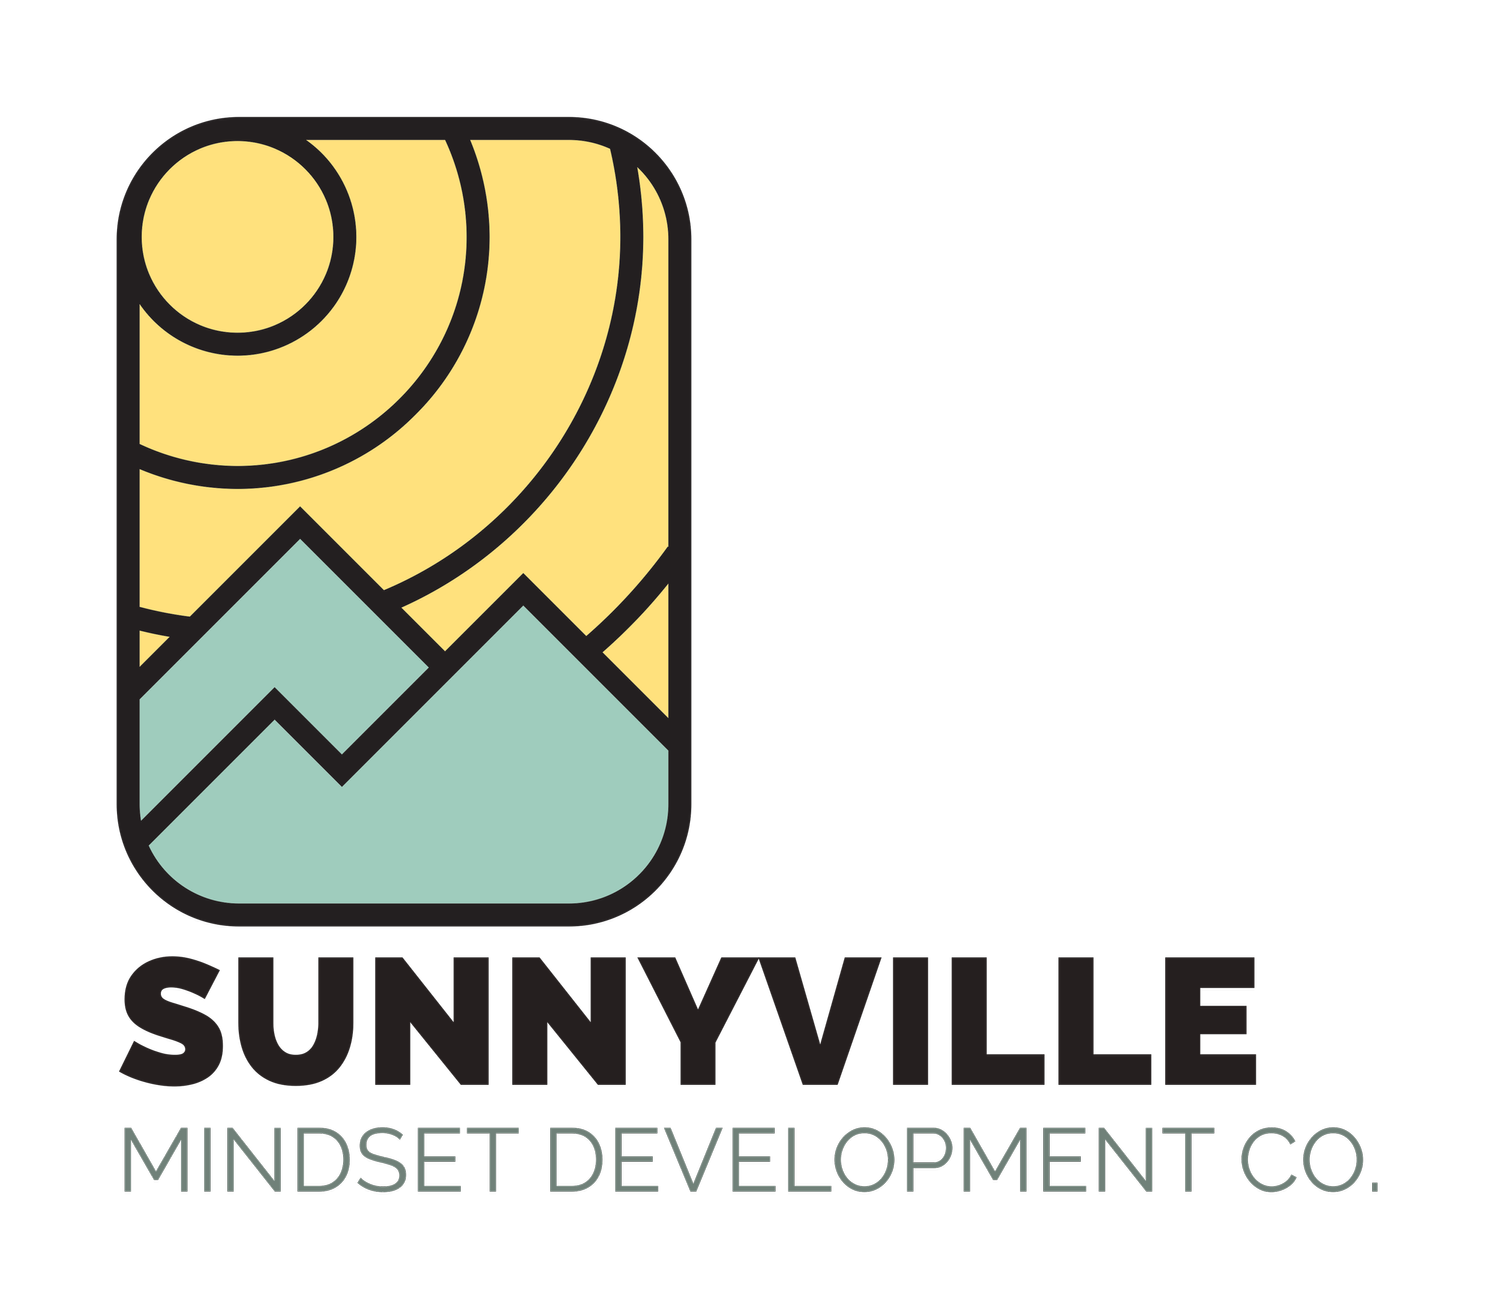 SunnyVille Mindset Development Co.